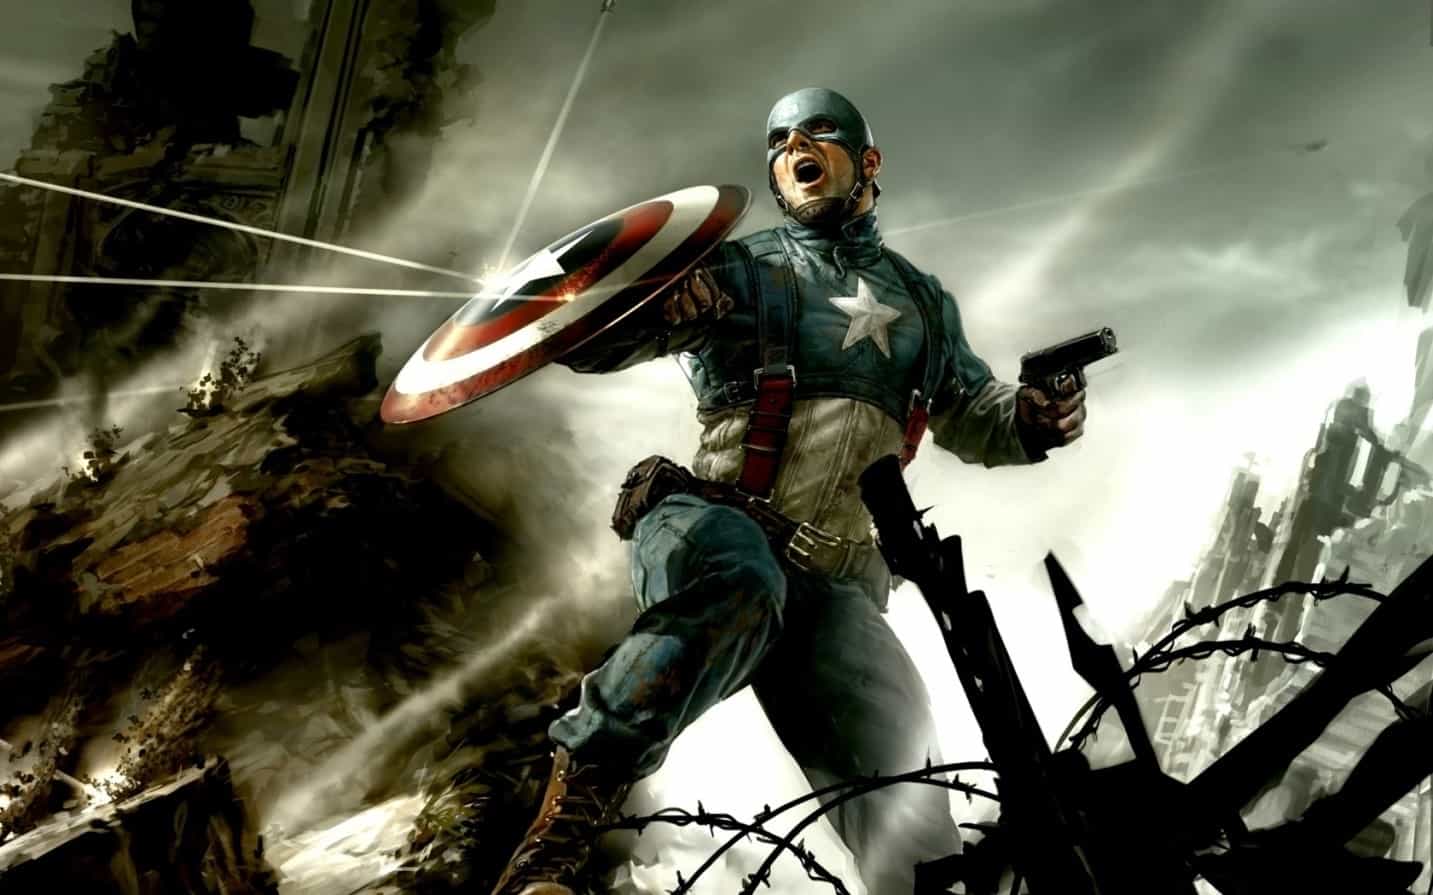 Captain America Costume Avengers: Infinity War